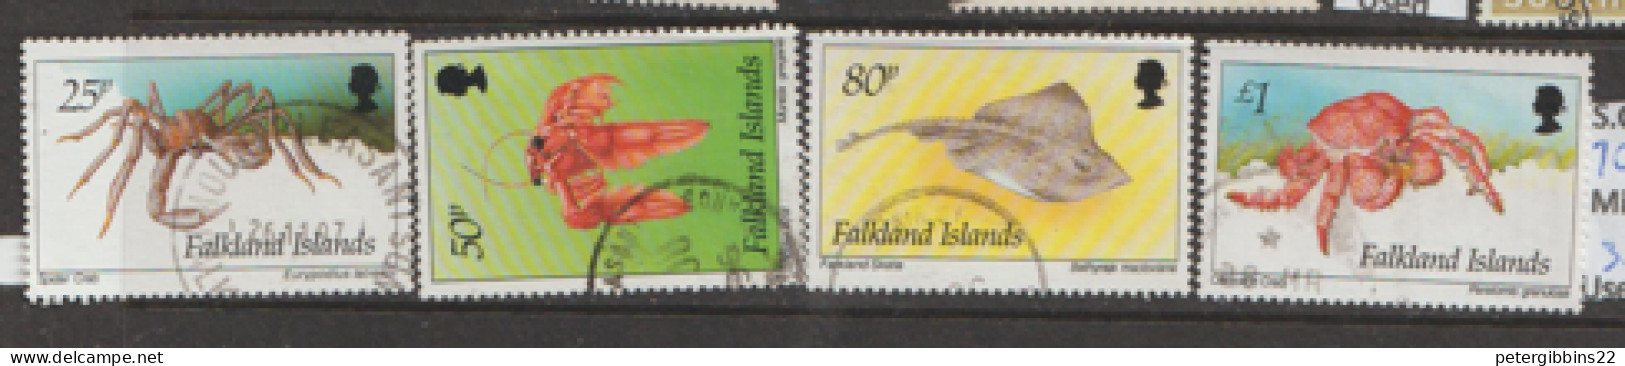 Falkland Islands  1994 SG 707-10  Marine  Life  Fine Used; - Falkland Islands